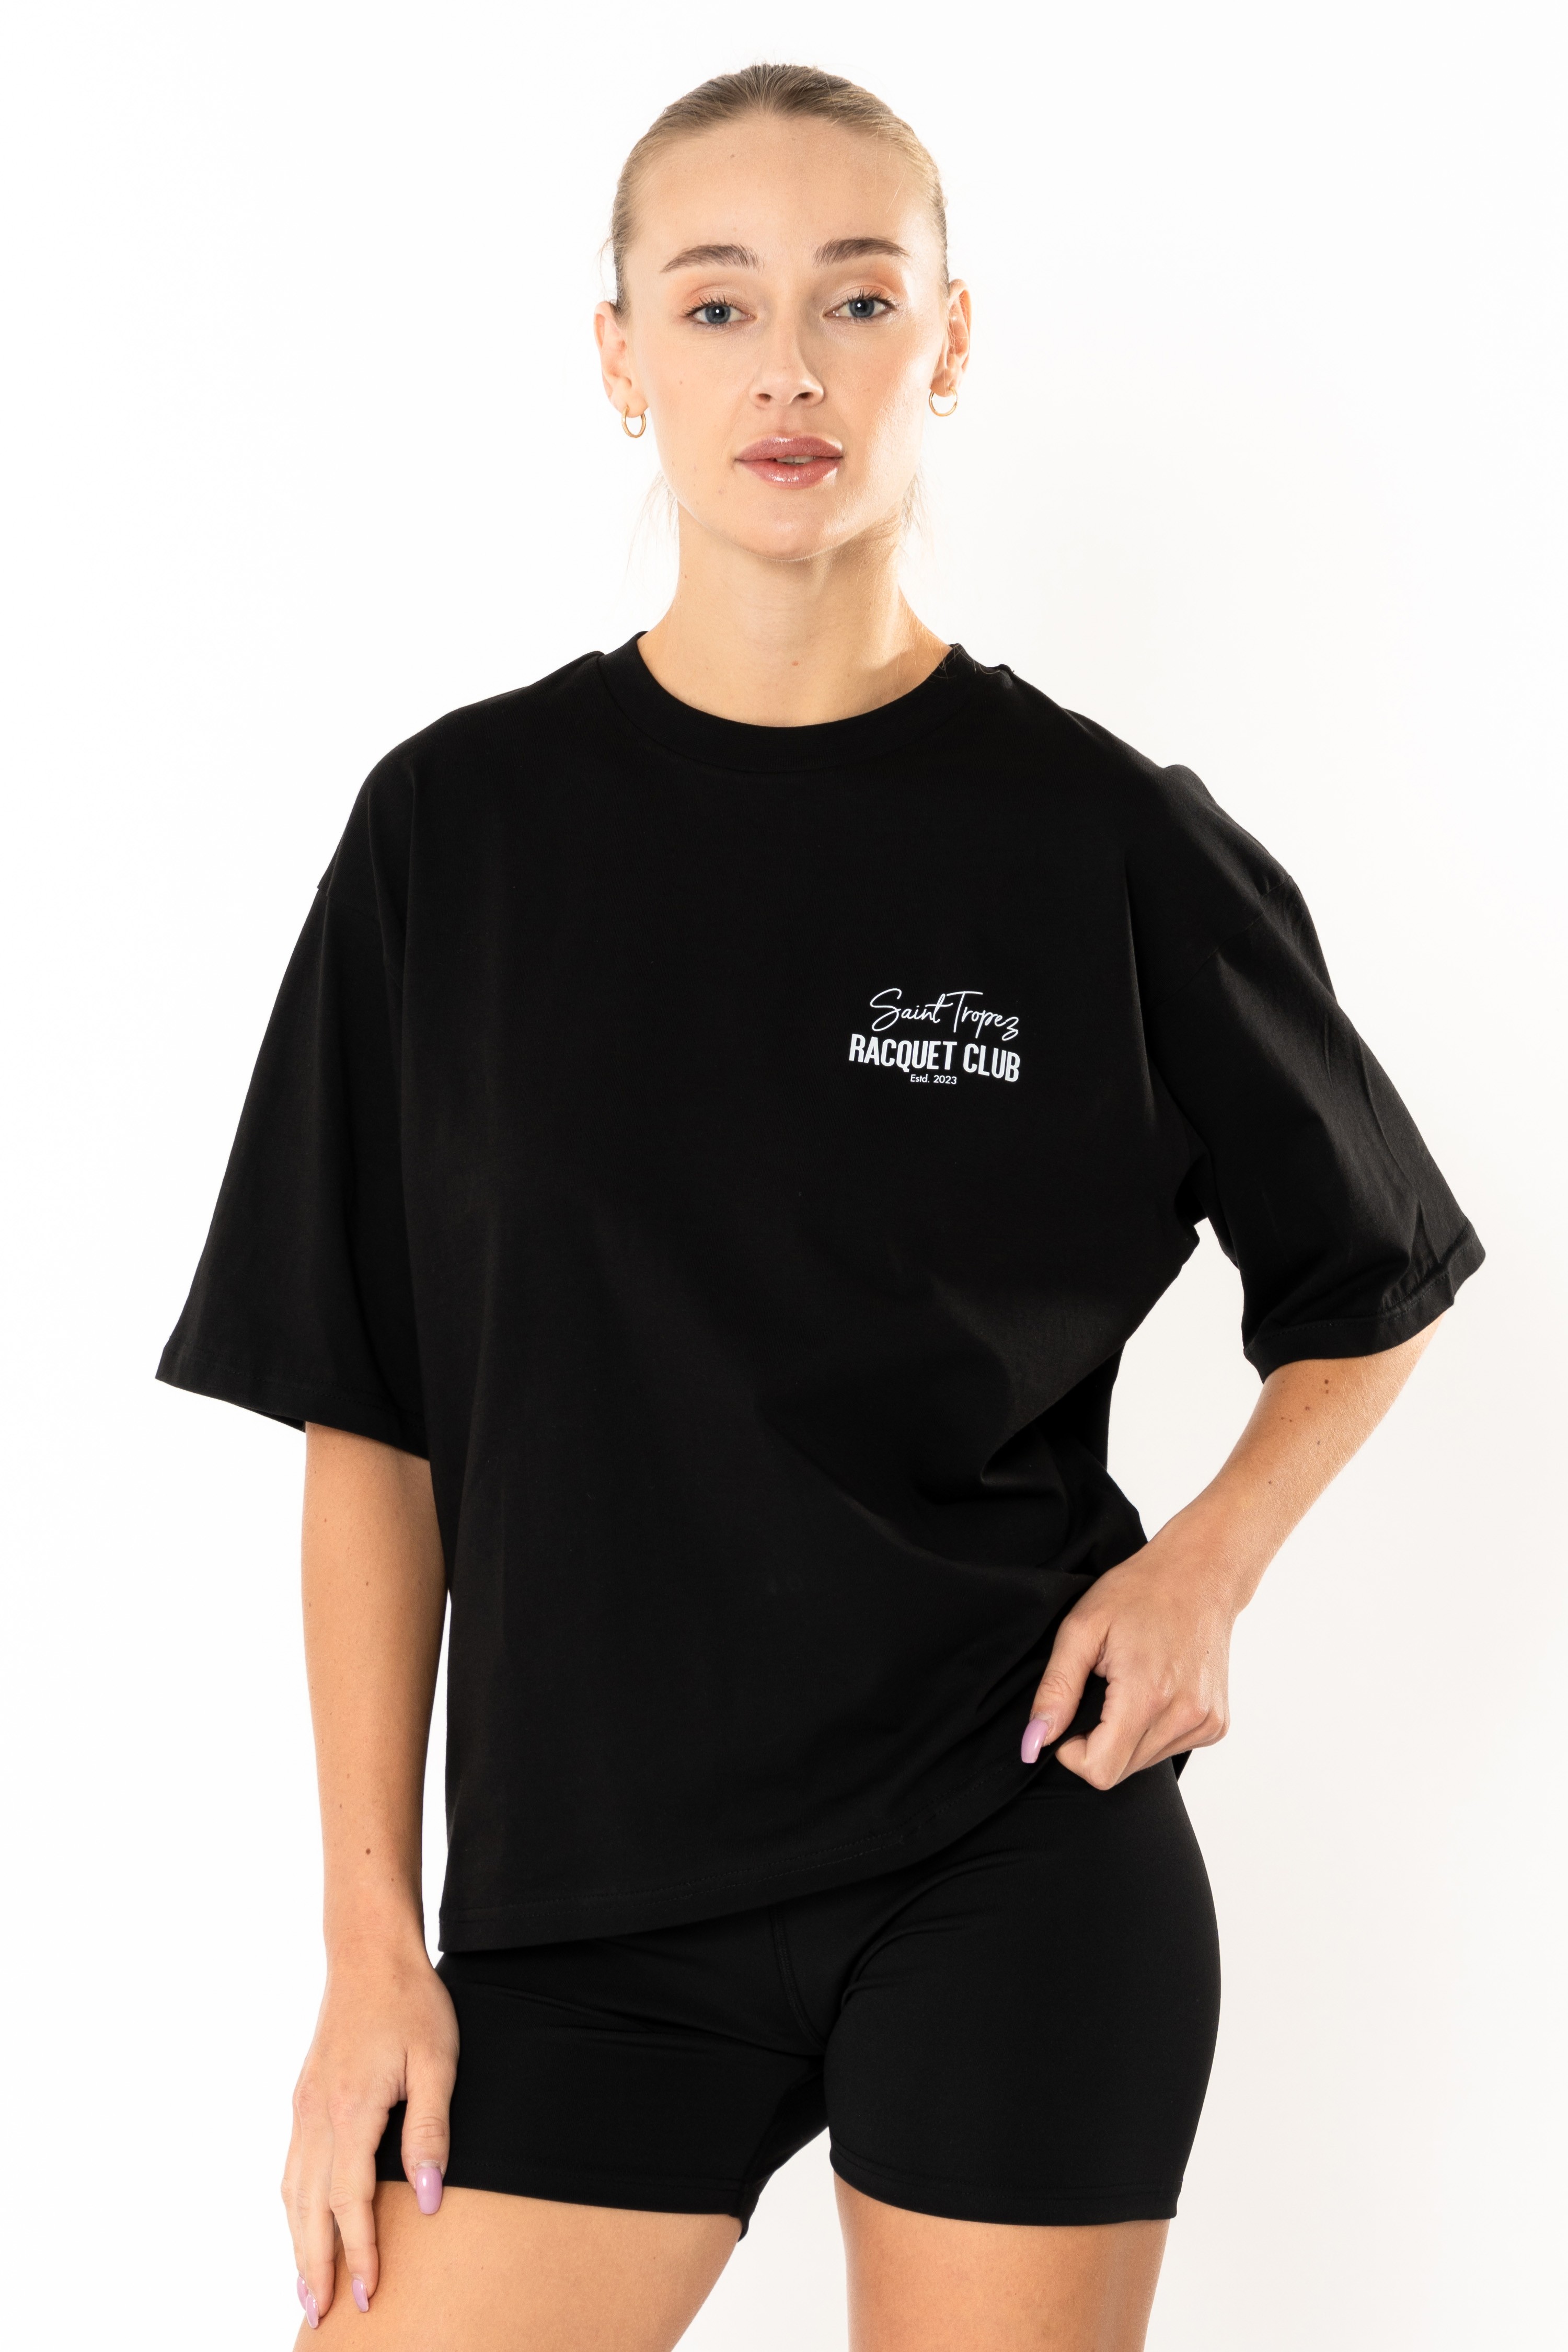 Racquet Lover Oversize T-Shirt Kadın - Siyah